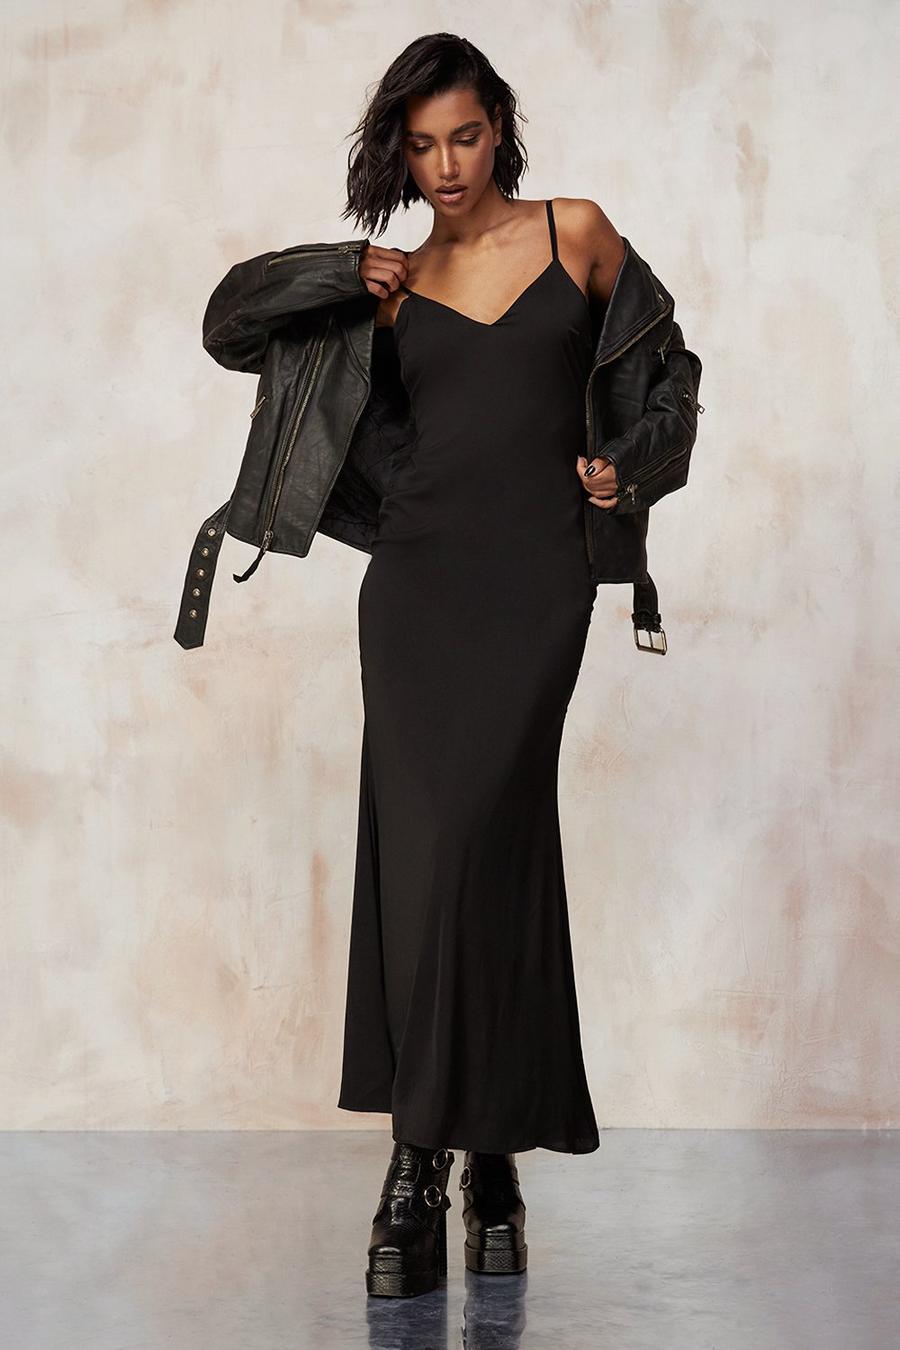 Black noir Kourtney Kardashian Barker Maxi Satin Dress